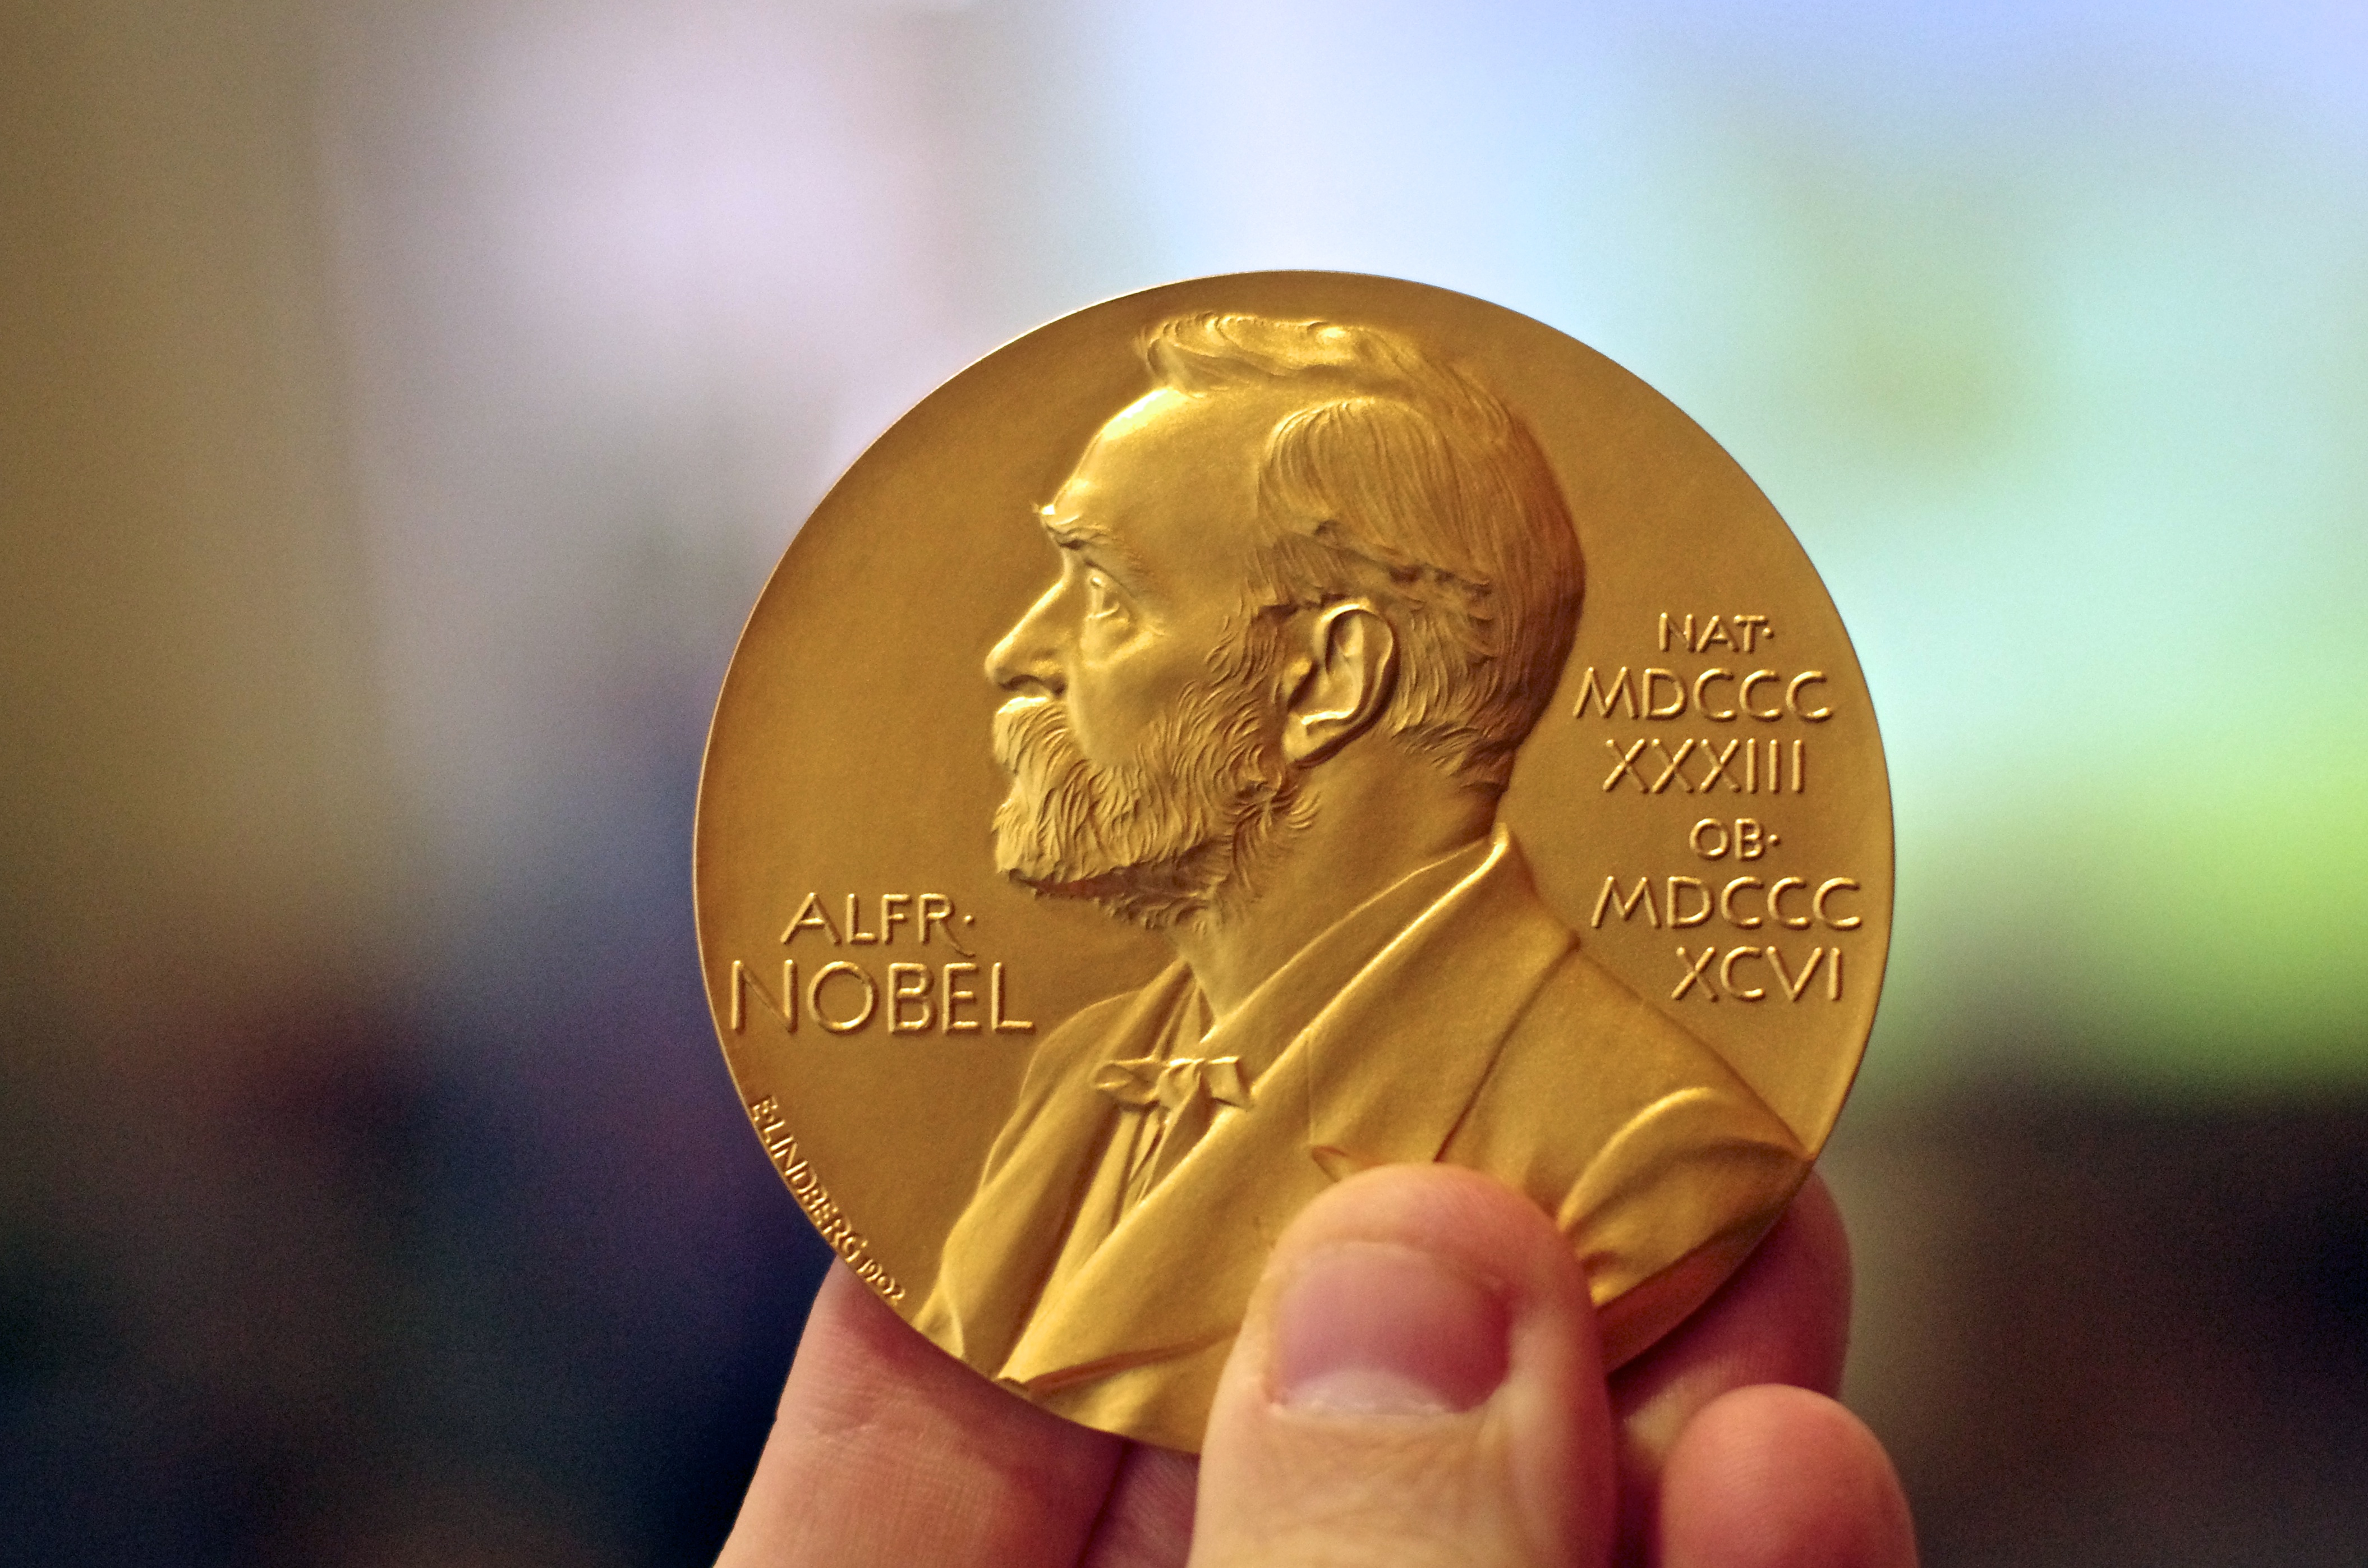 Nobel de literatura sai para Svetlana Aleksievitch, da Bielorrússia